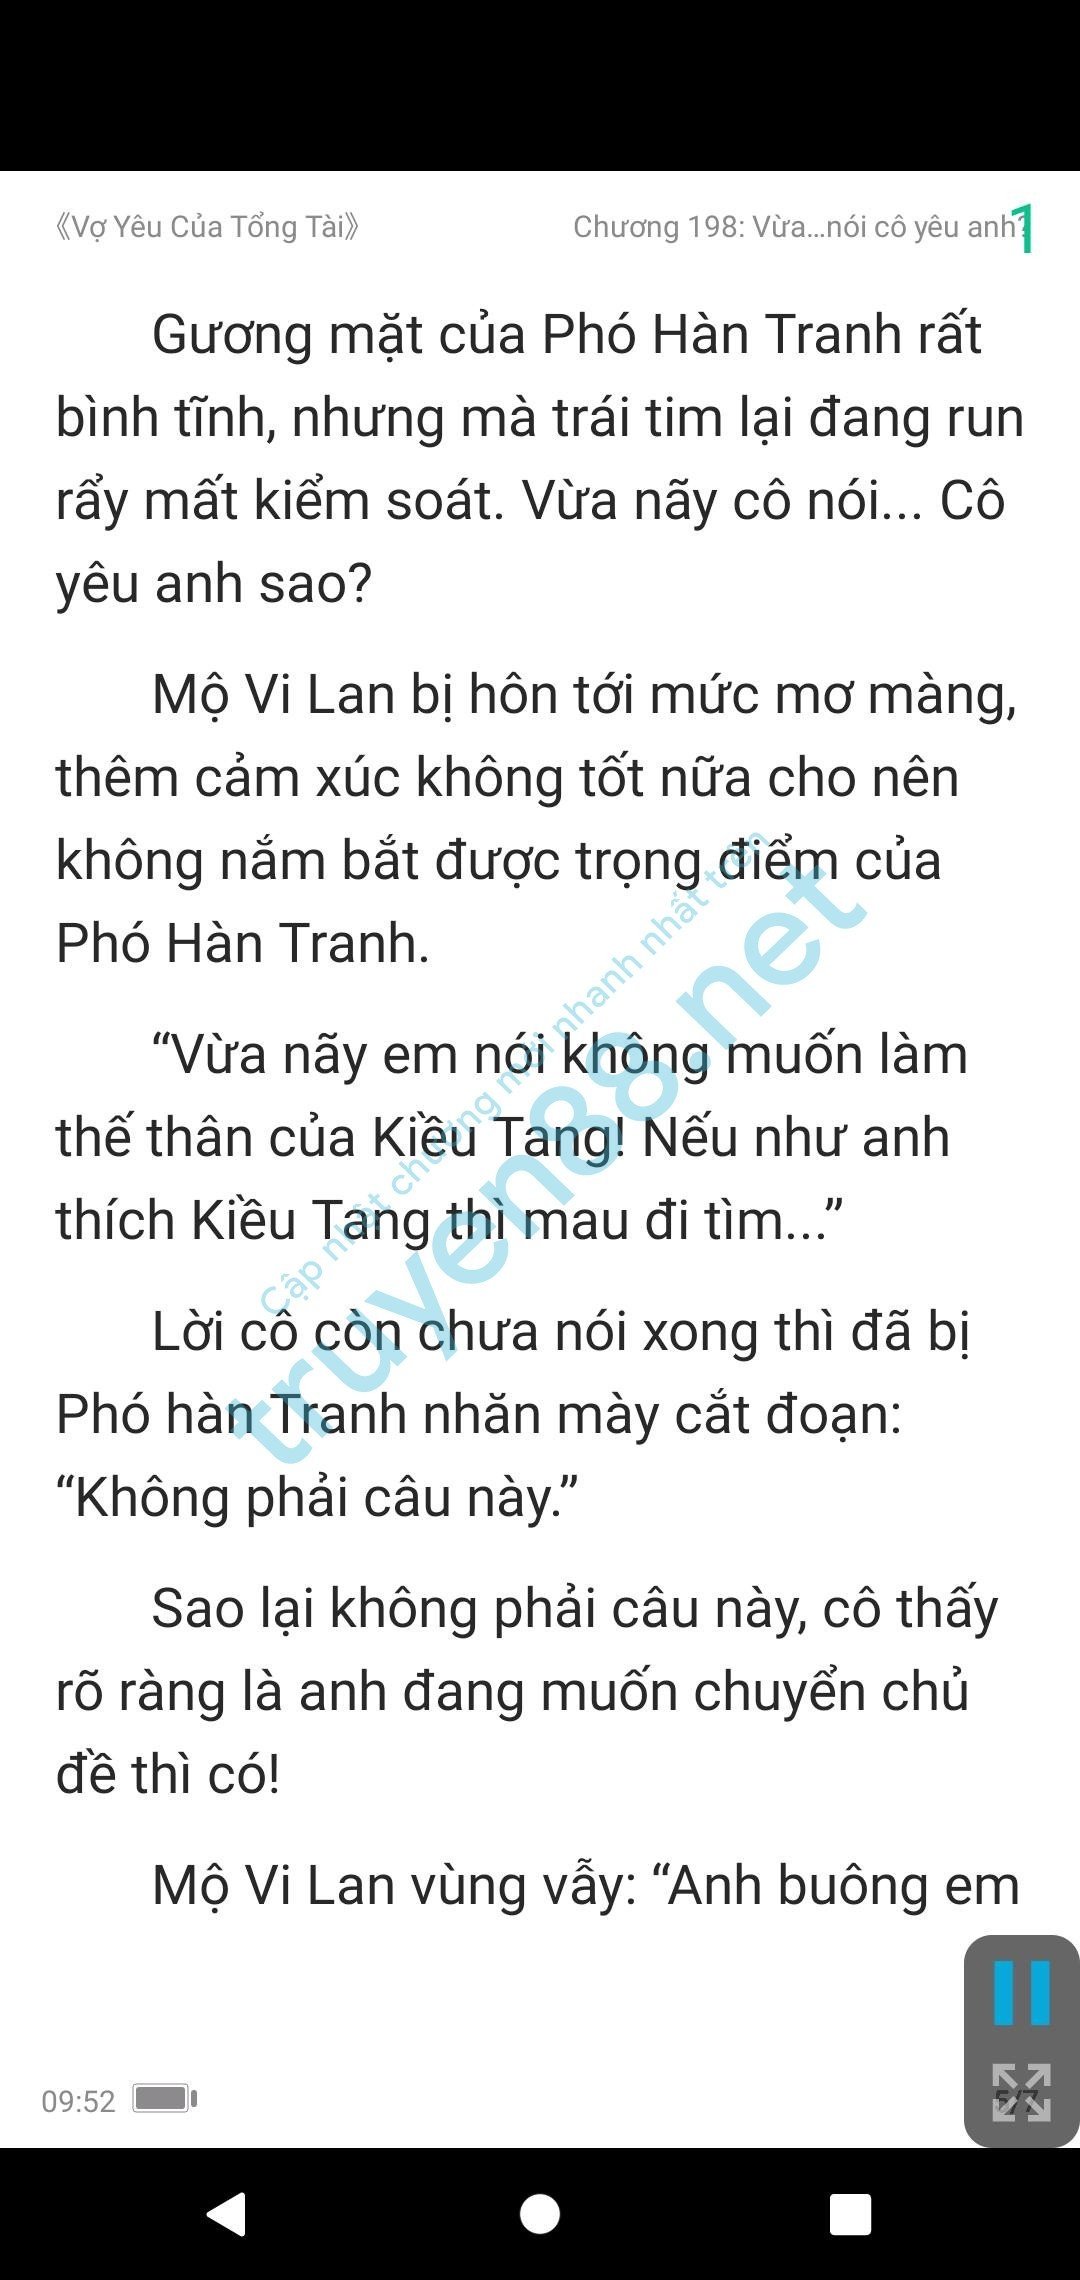 vo-yeu-cua-tong-tai-mo-vi-lan--pho-han-tranh-198-1